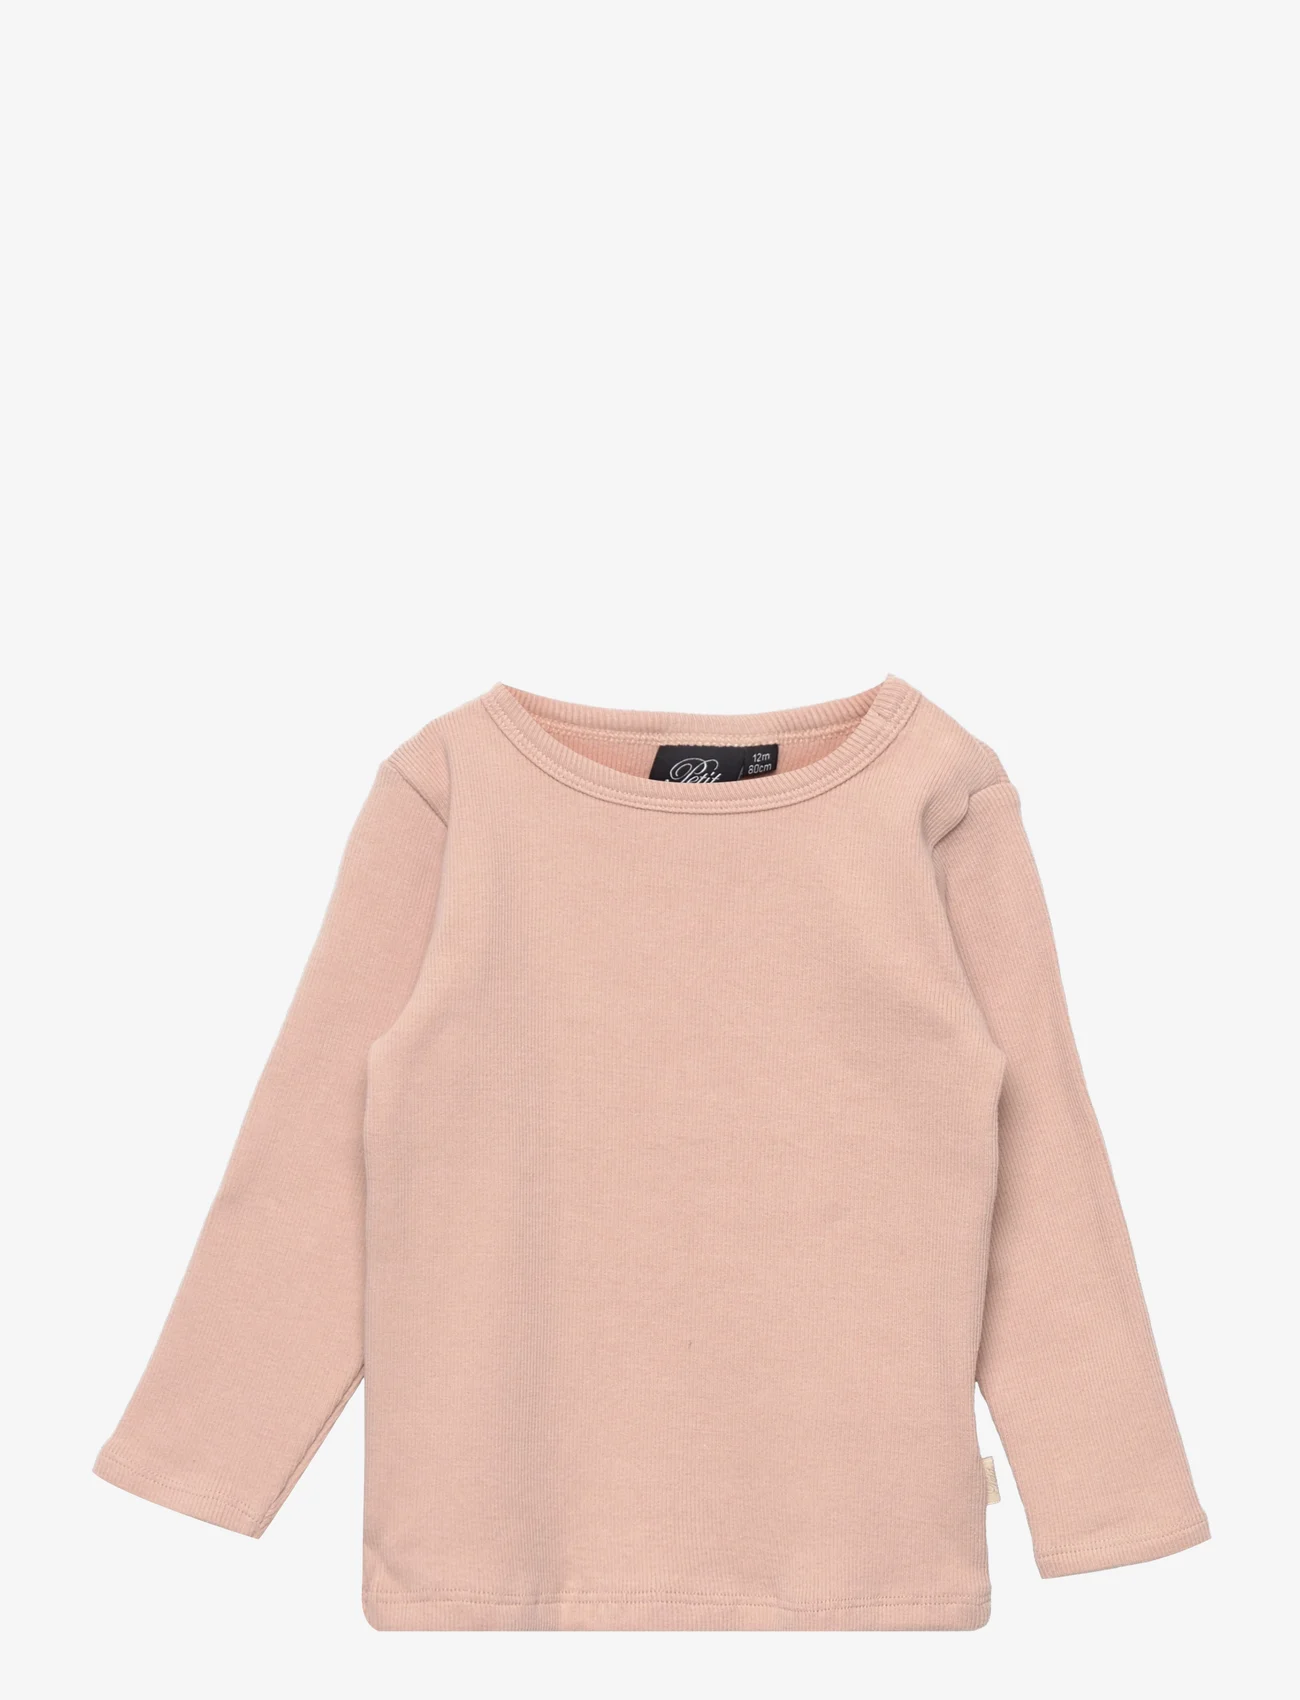 Sofie Schnoor Baby and Kids - T-shirt long-sleeve - langärmelige - light rose - 0